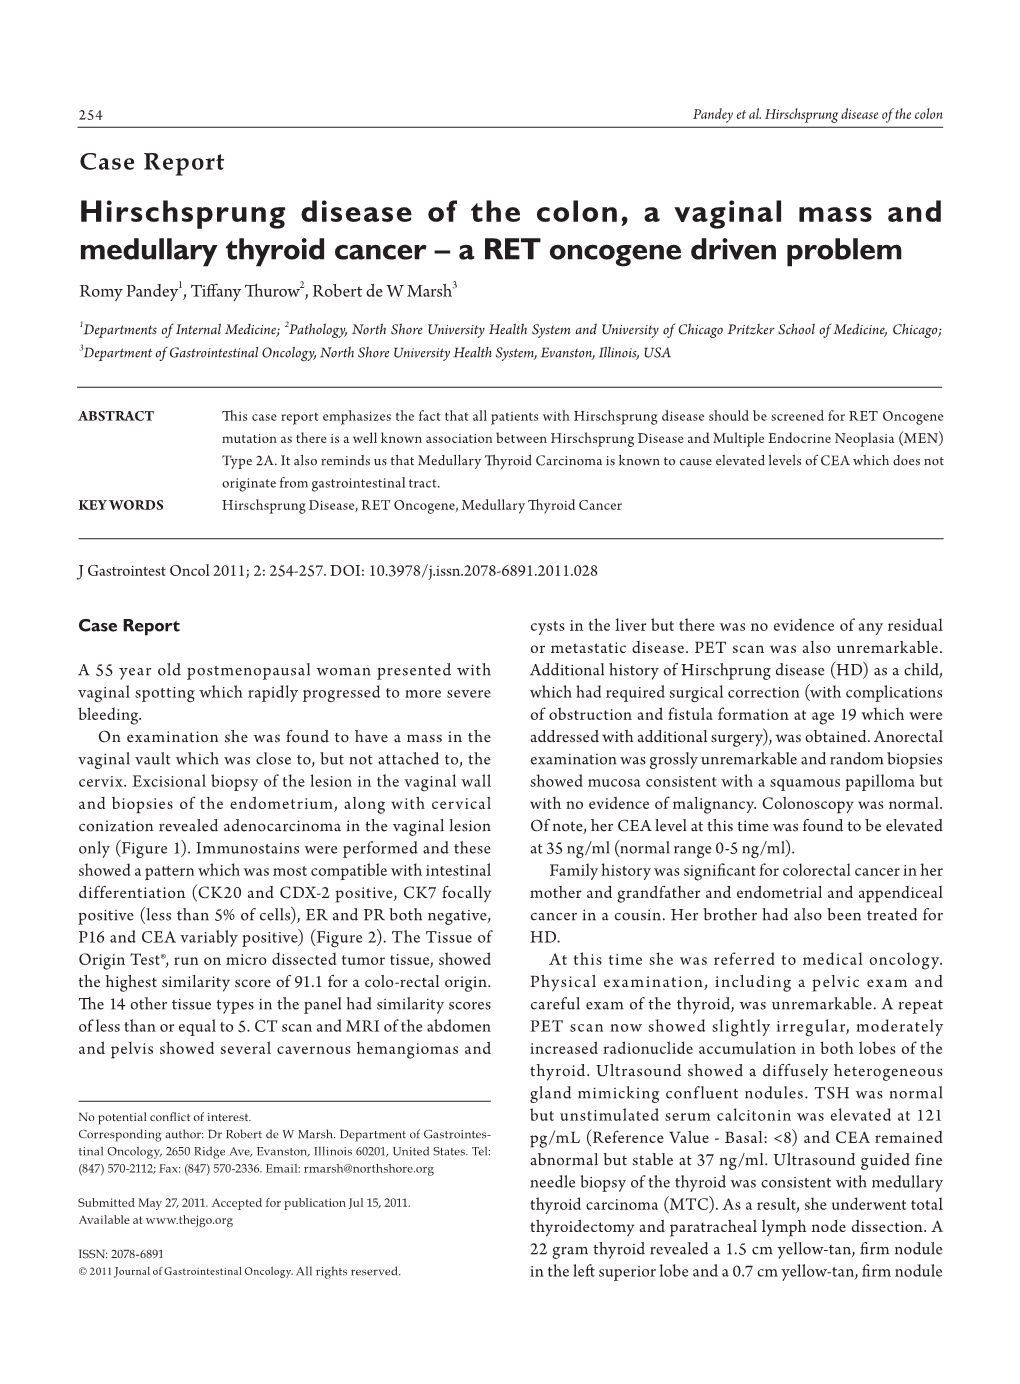 Hirschsprung Disease of the Colon